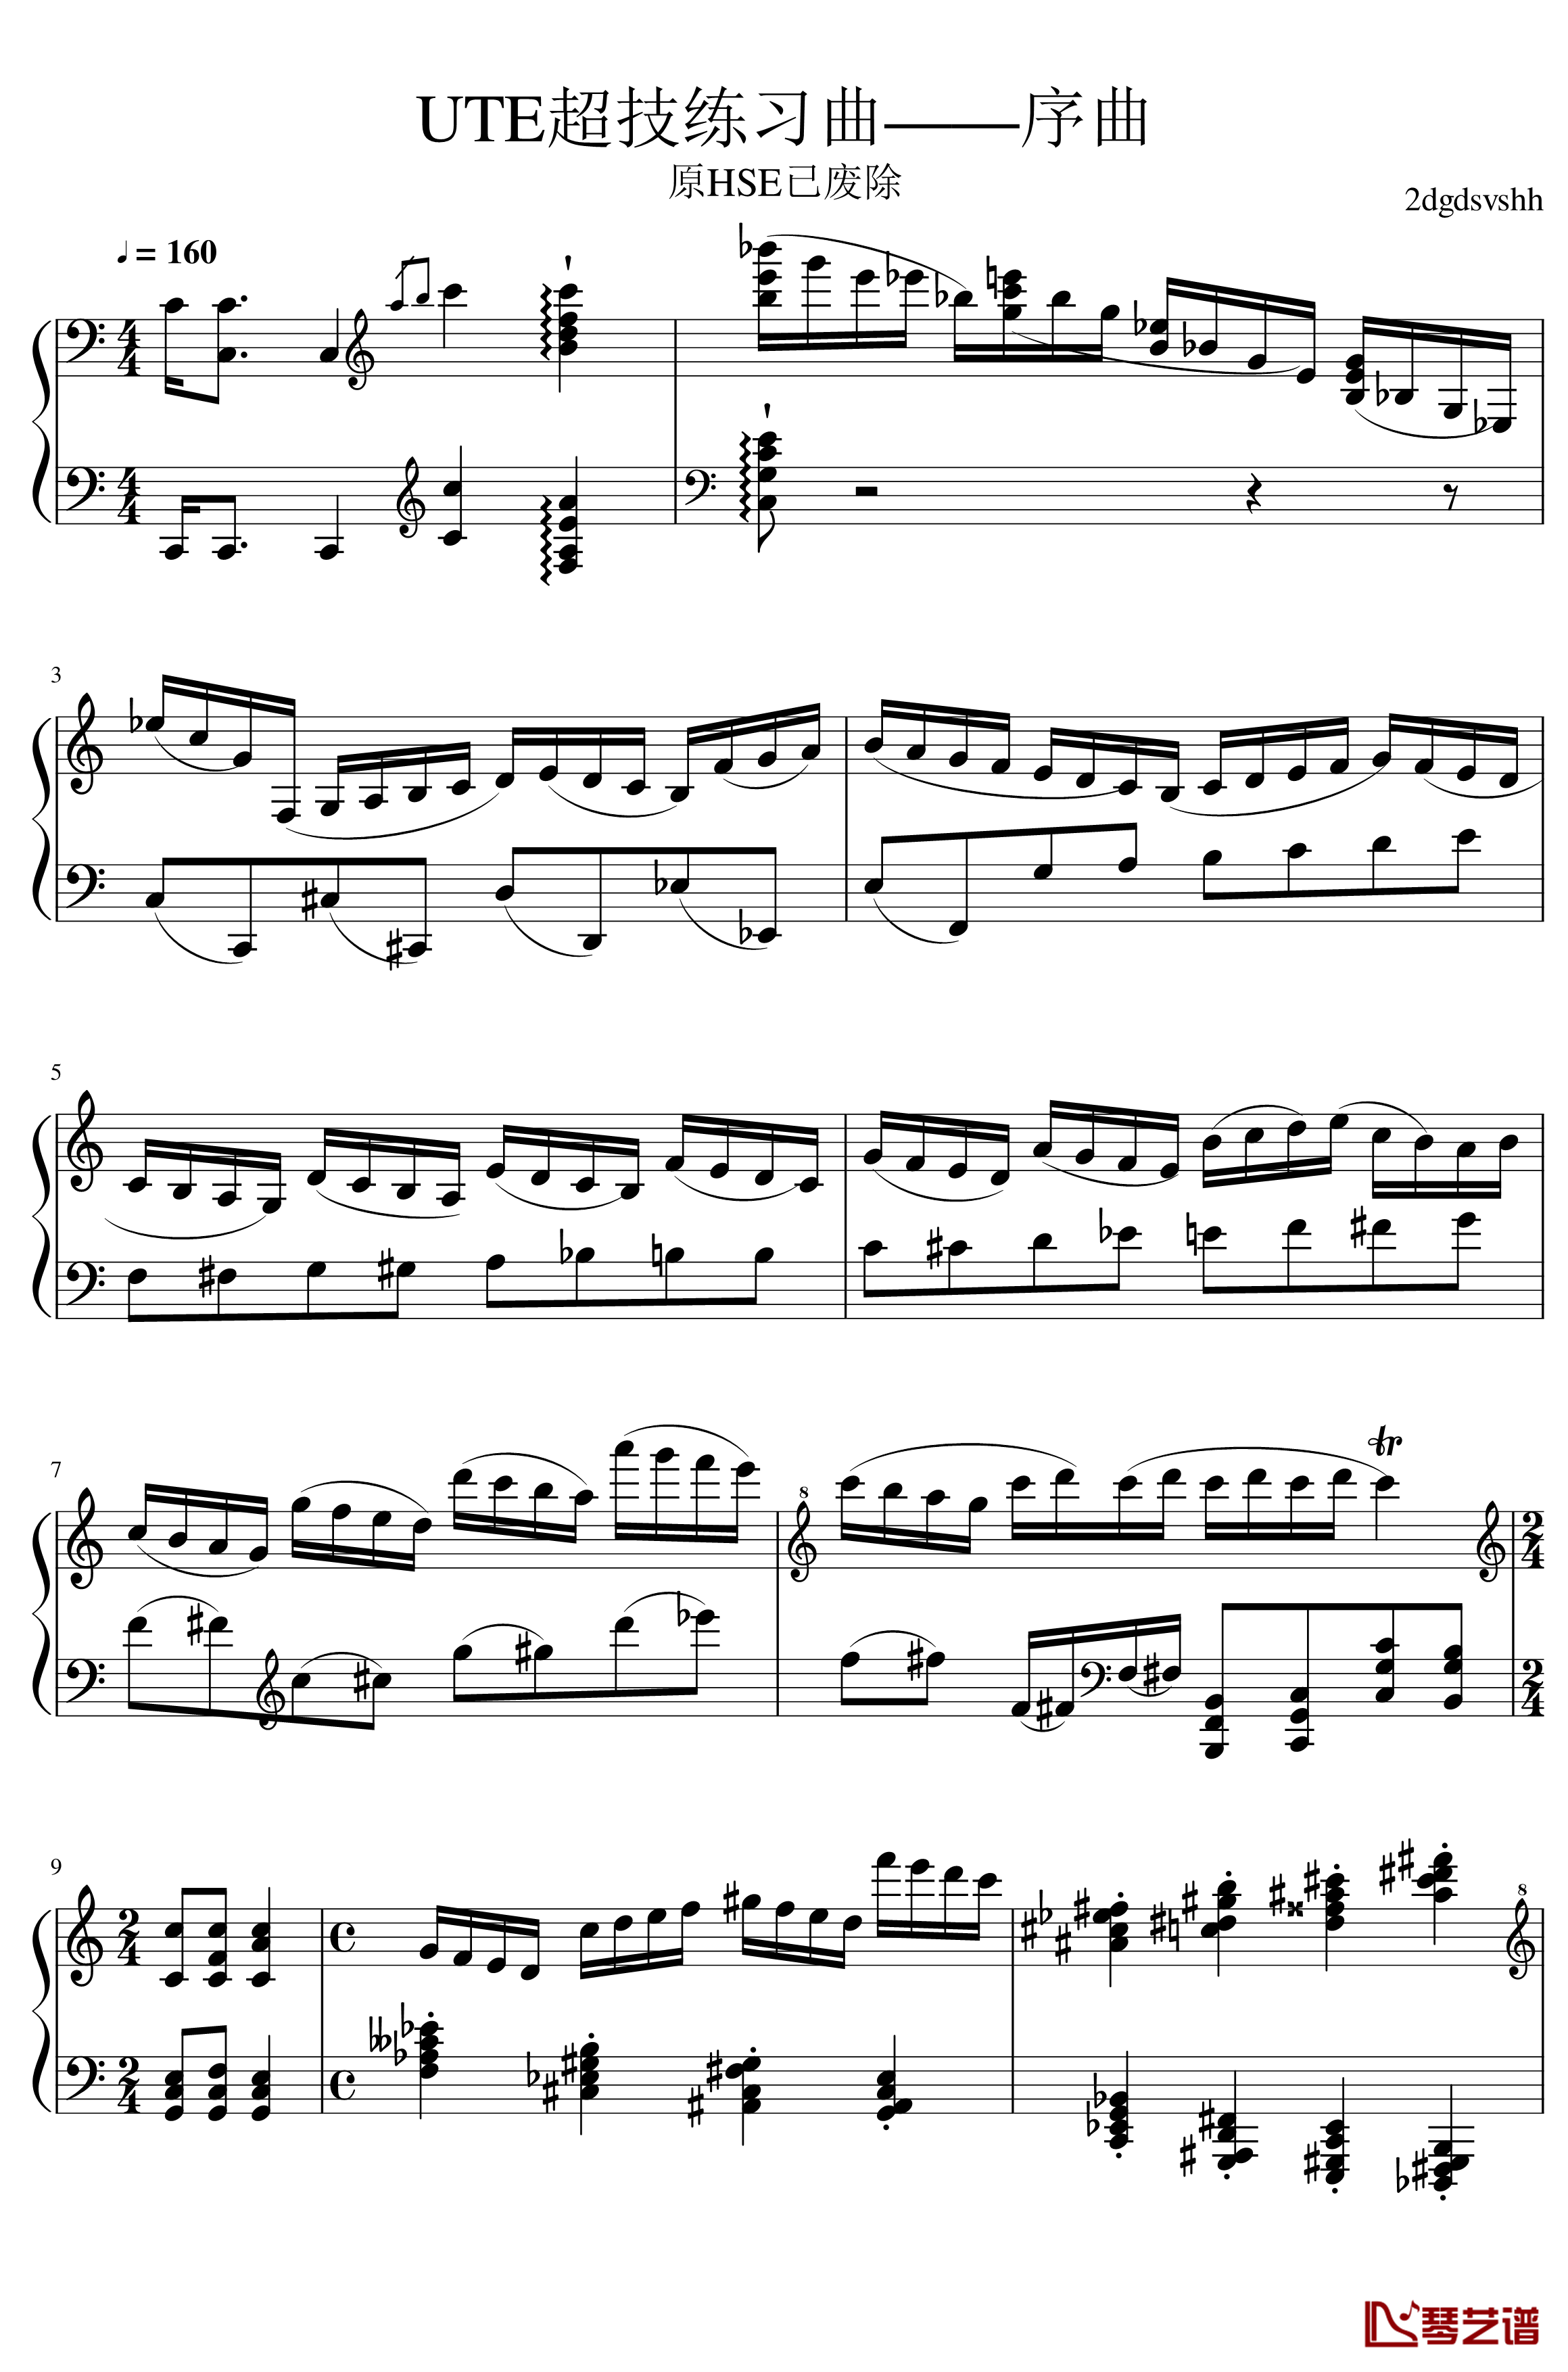 UTE超技练习曲钢琴谱-序曲-2dgdsvshh1